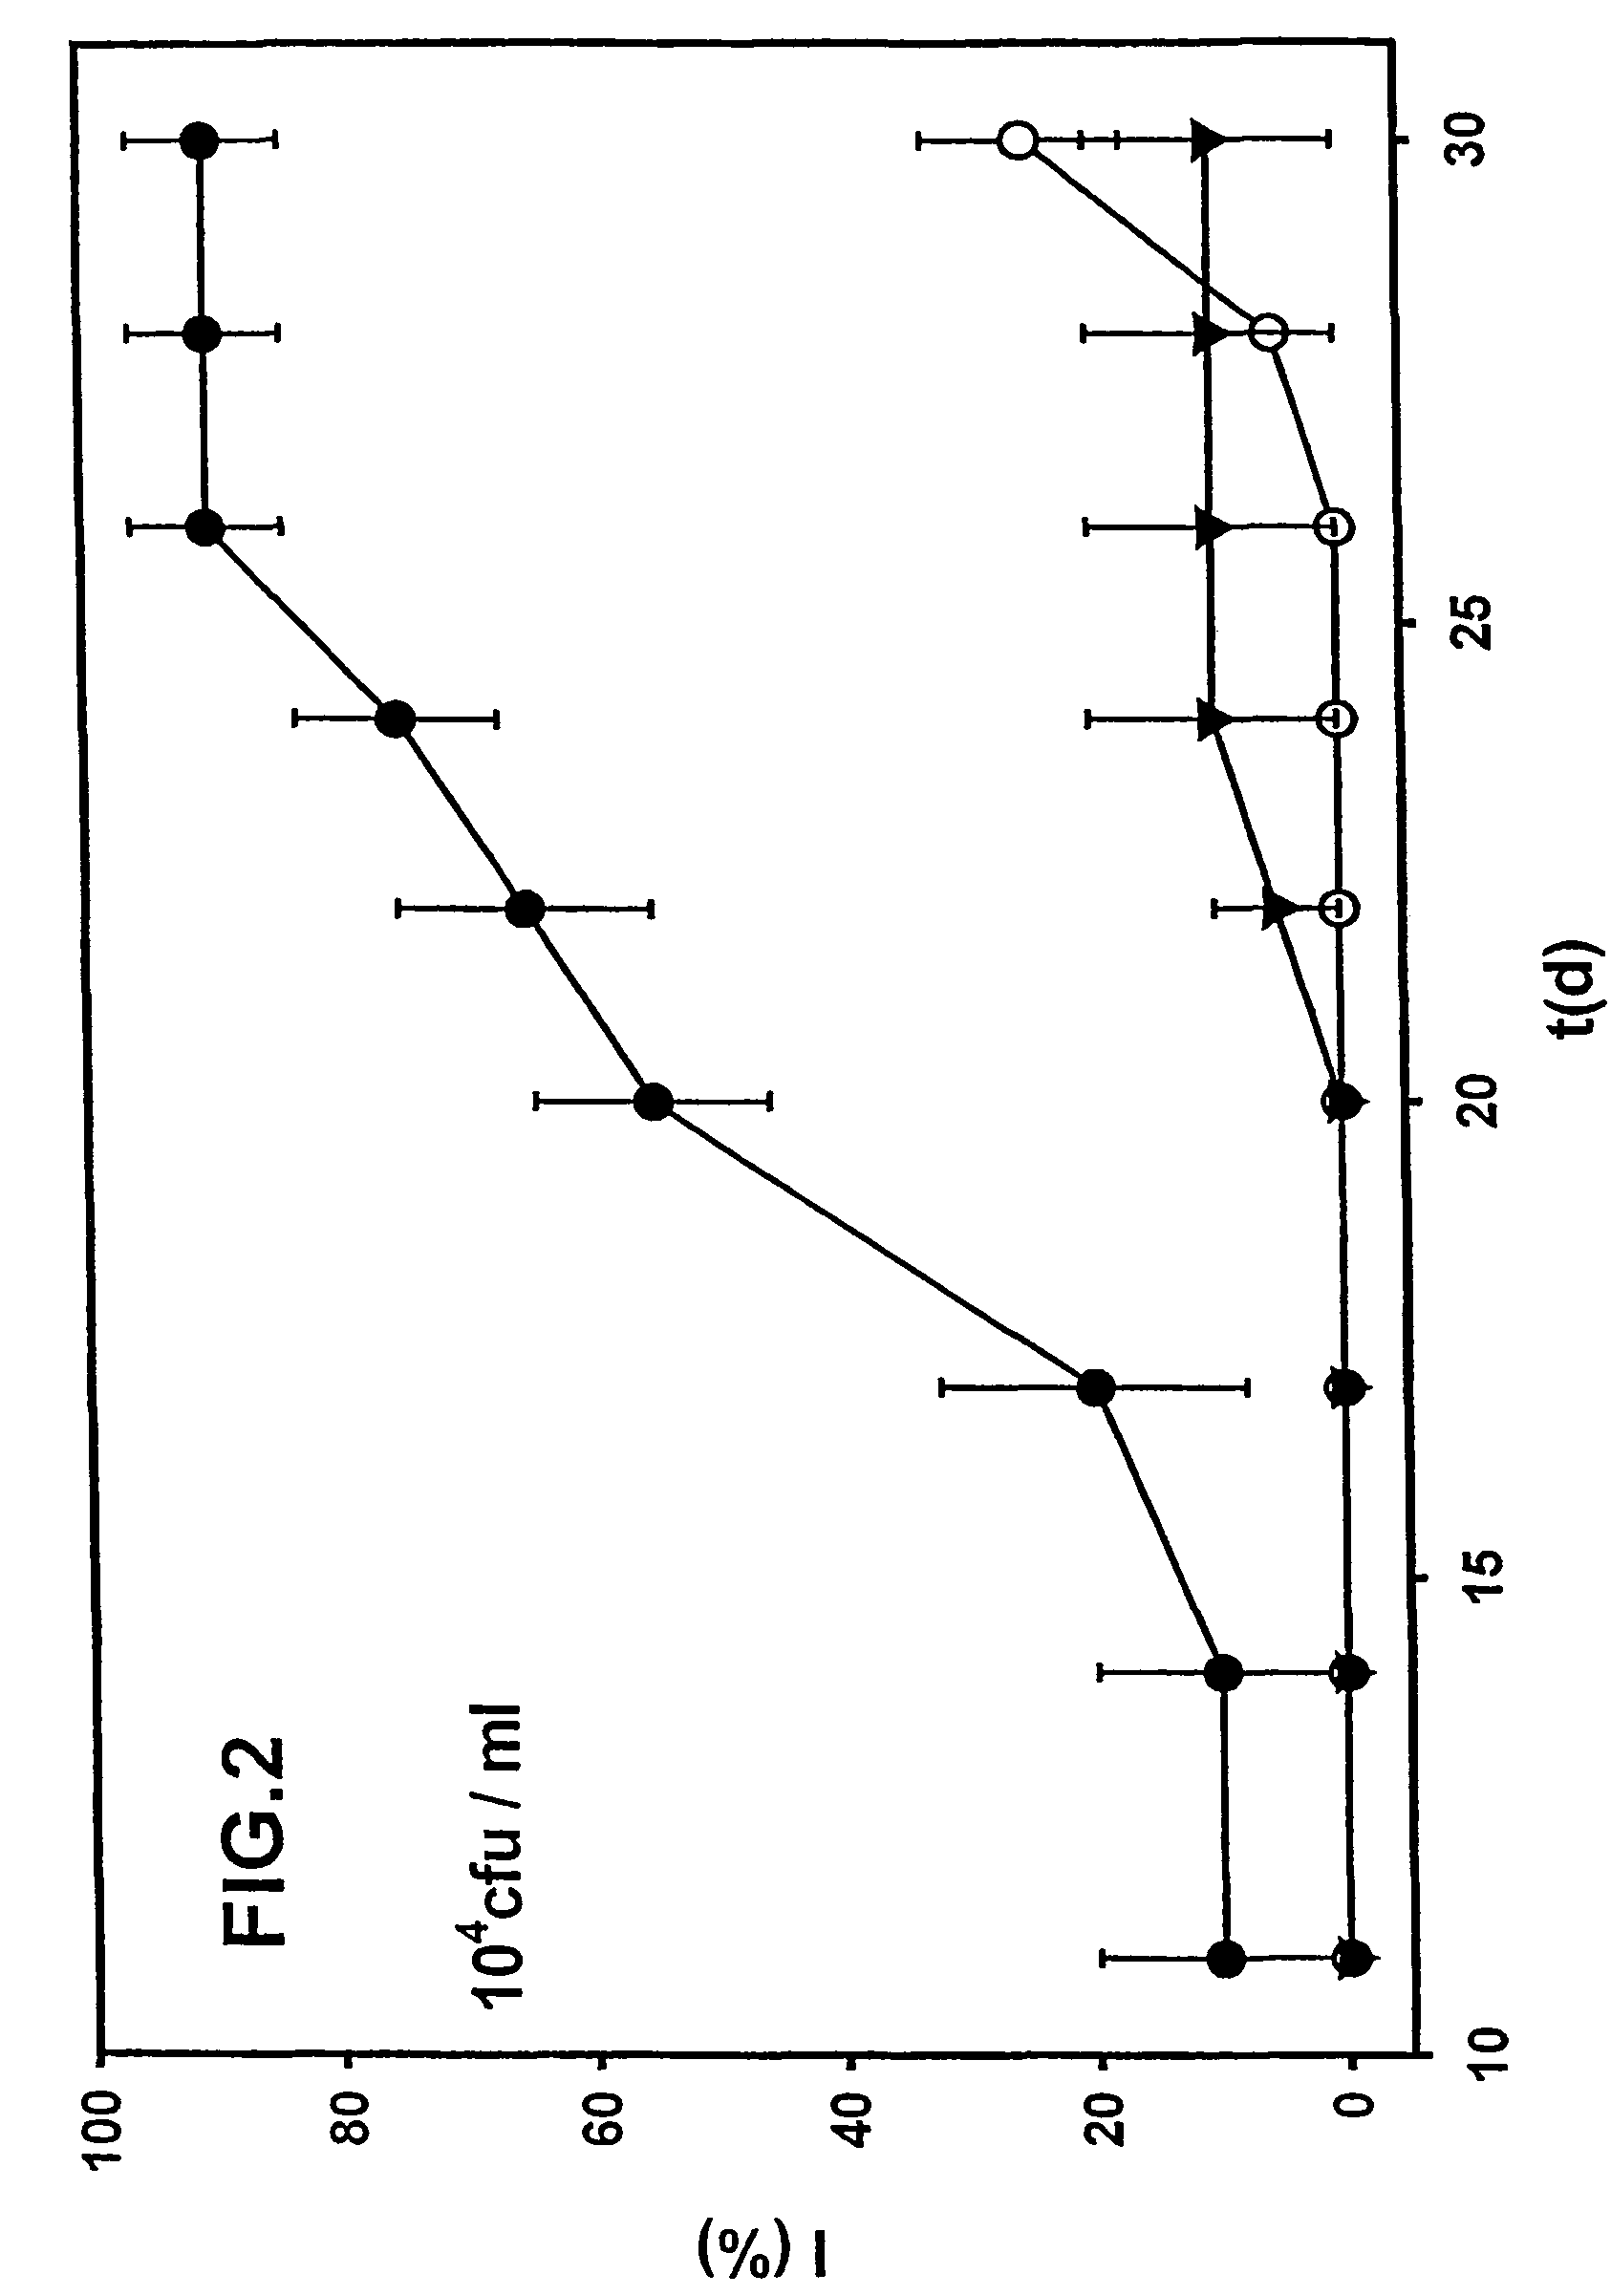 Substrates containing a Trichoderma asperellum strain for biological control of Fusarium and Rhizoctonia